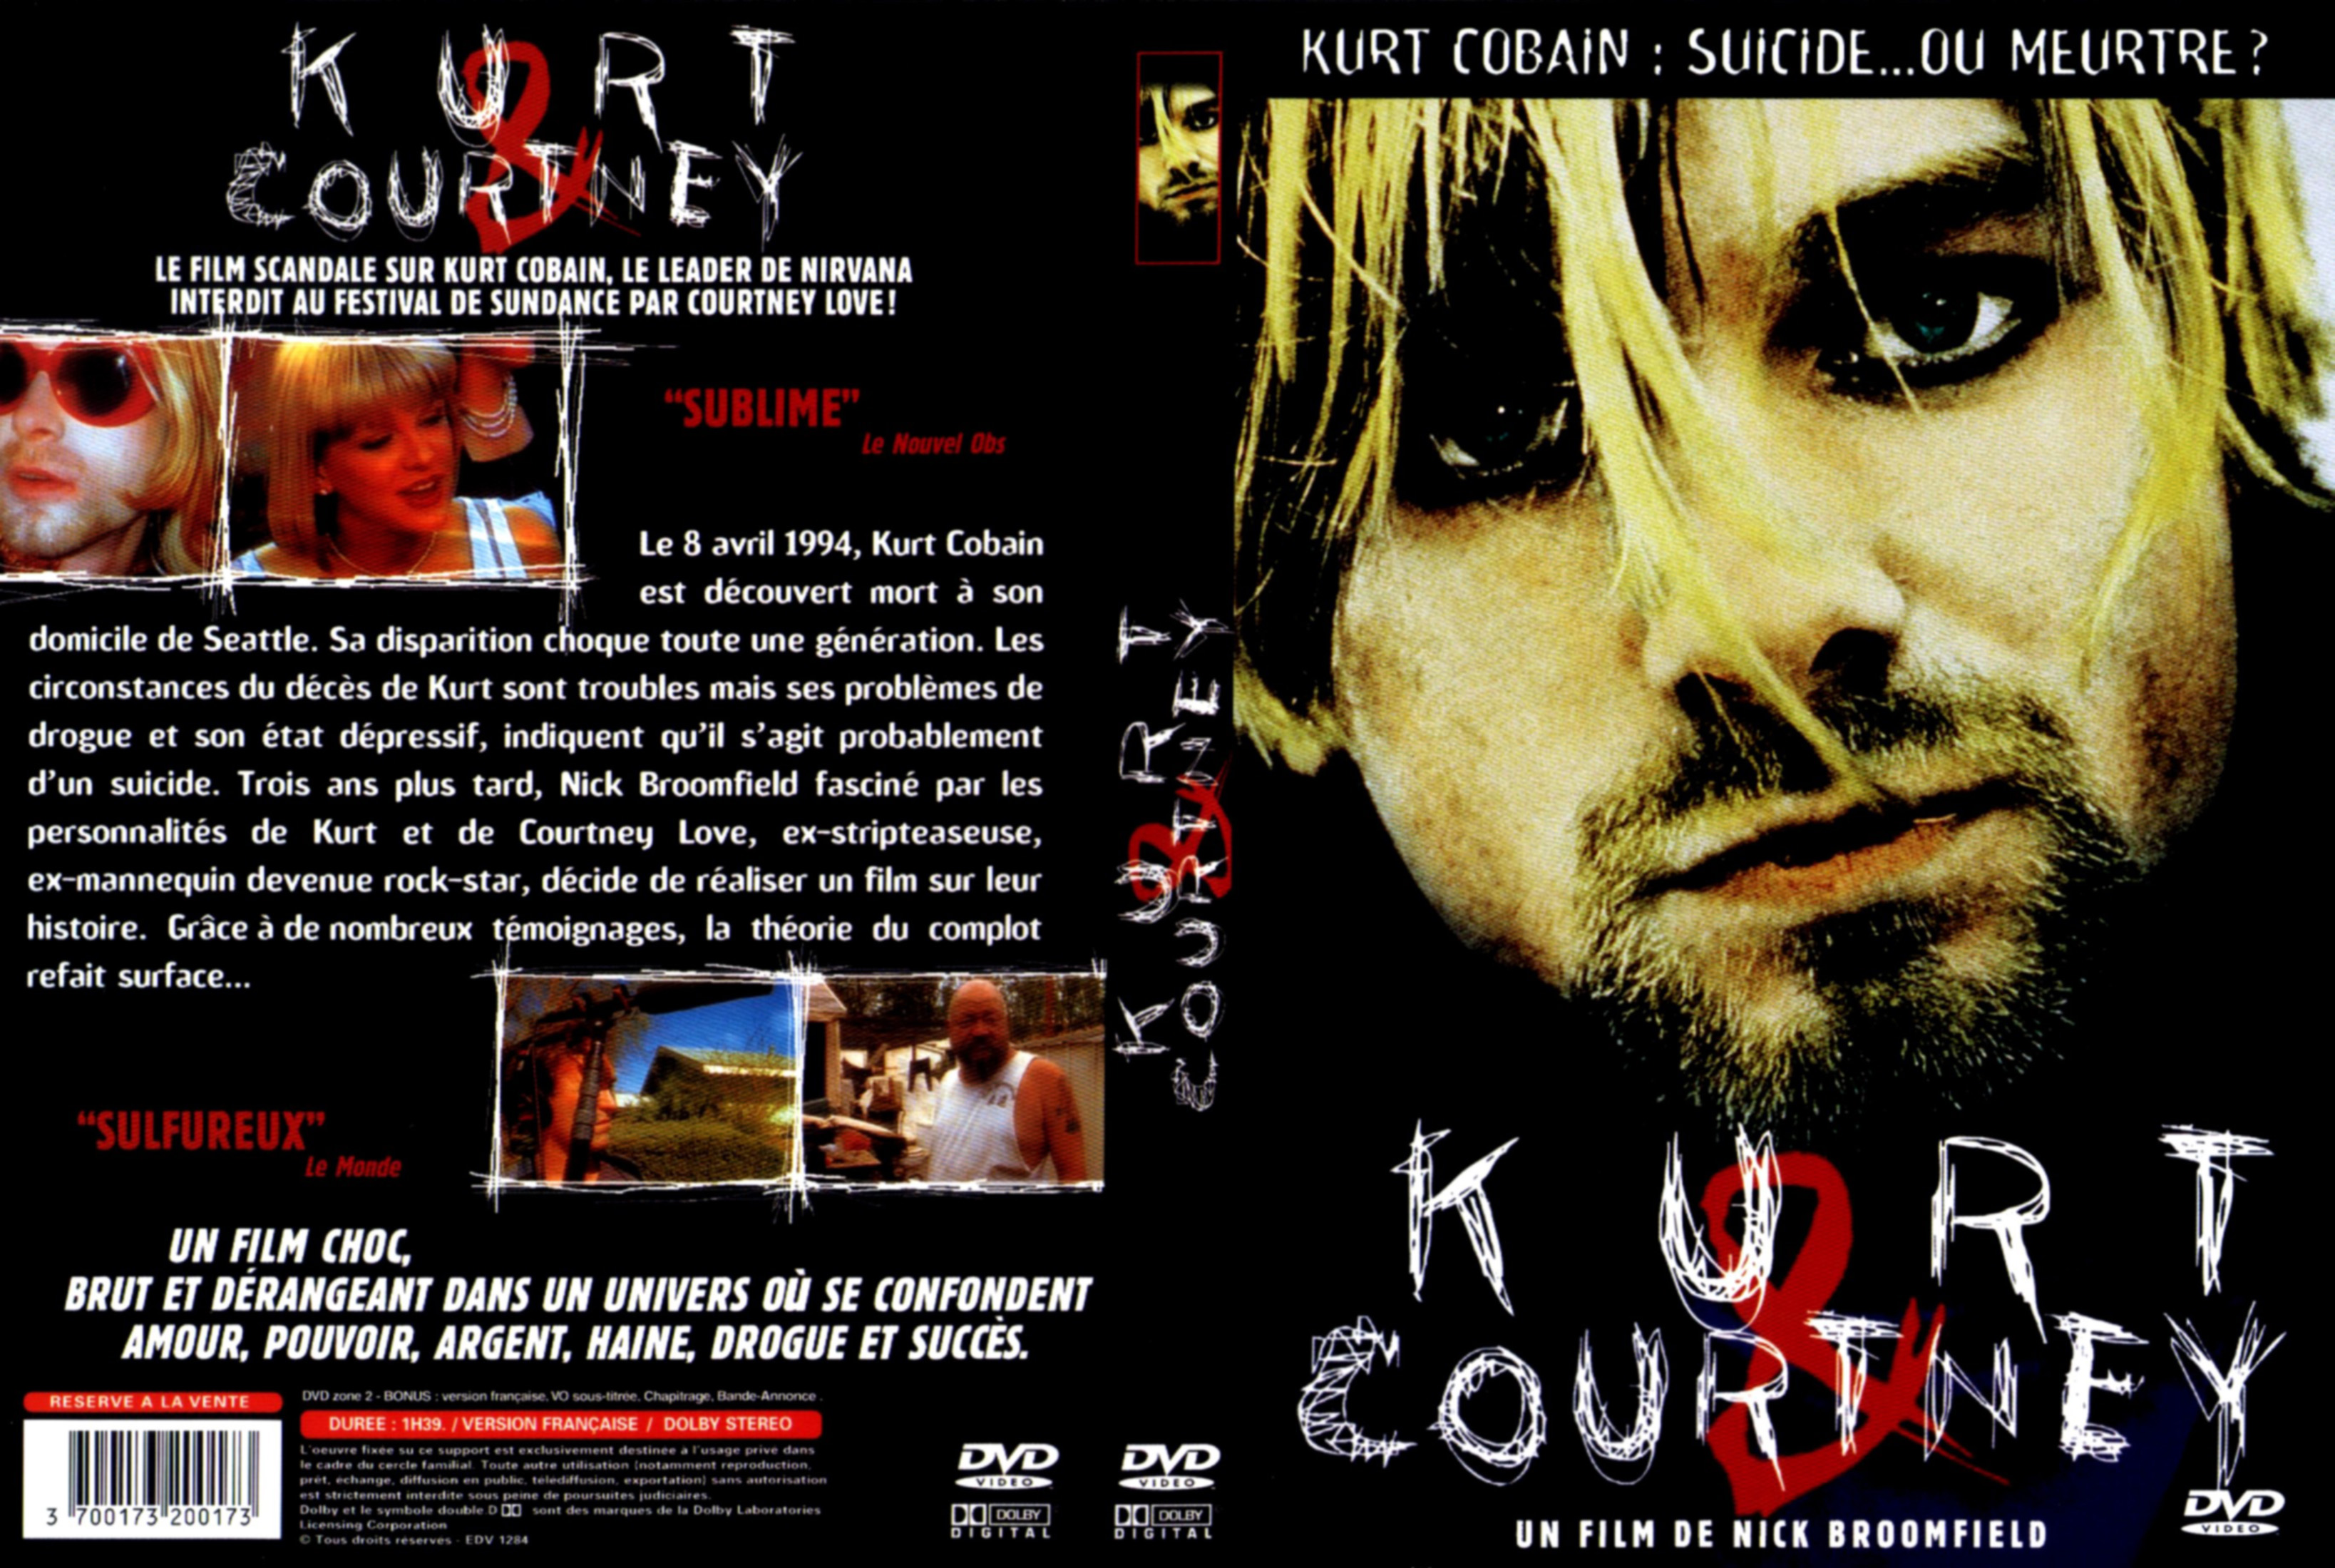 Jaquette DVD Kurt and Courtney v2